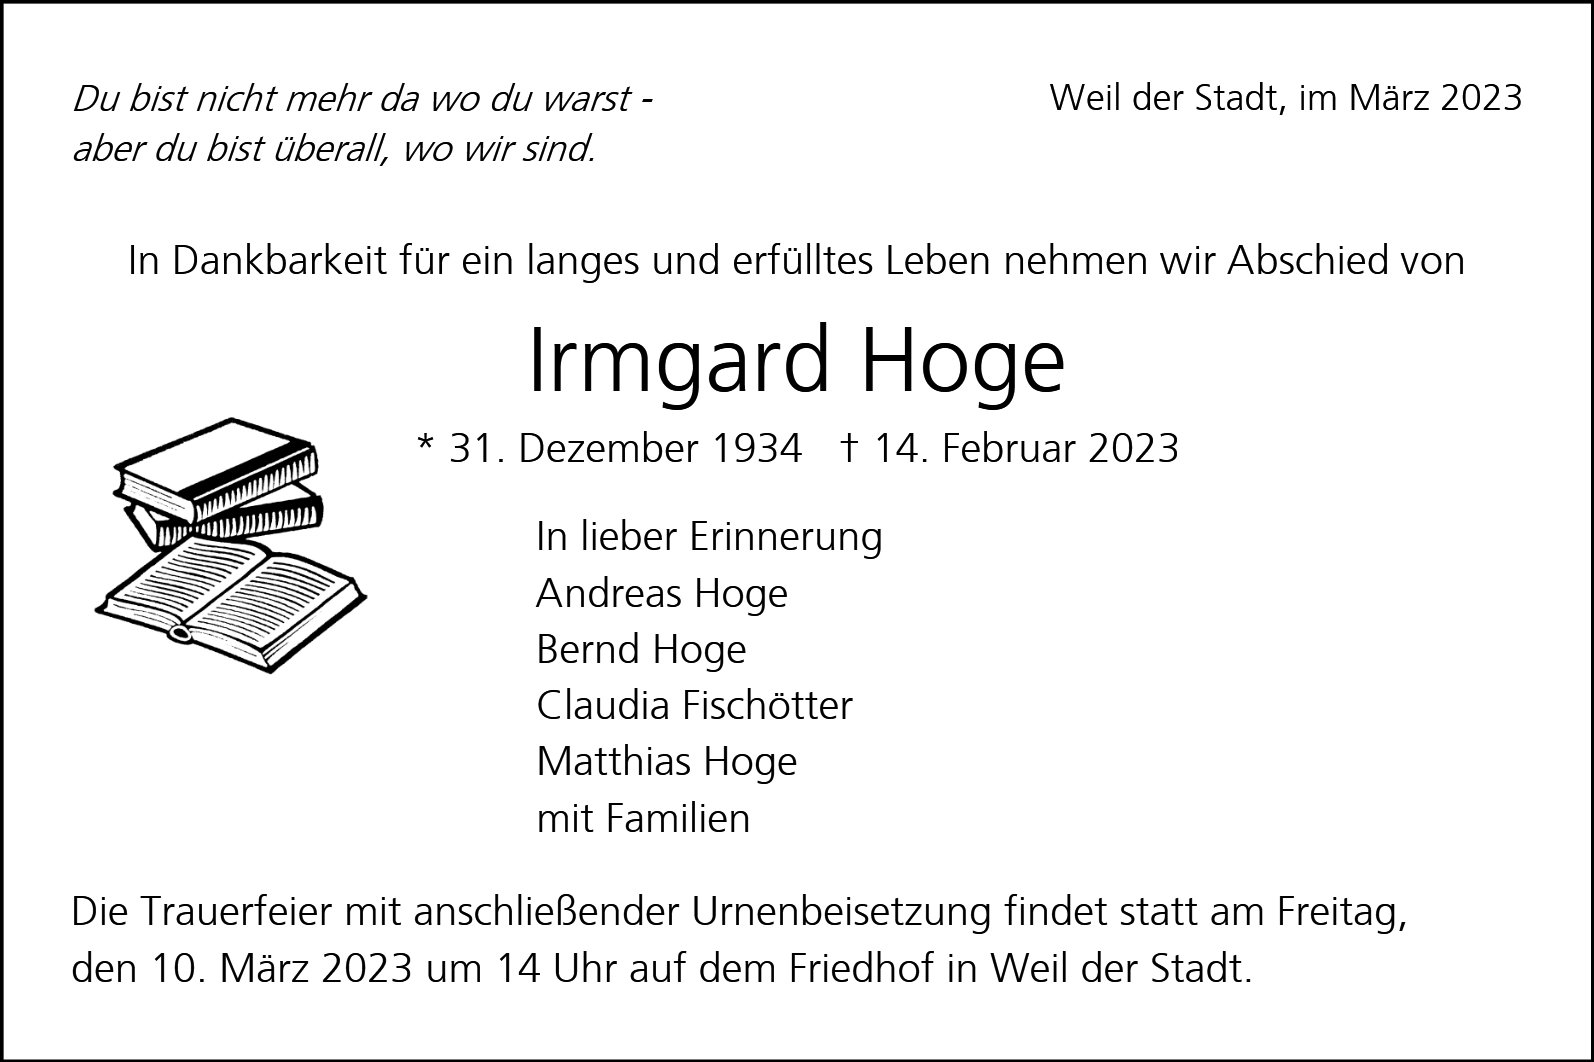 Irmgard Hoge